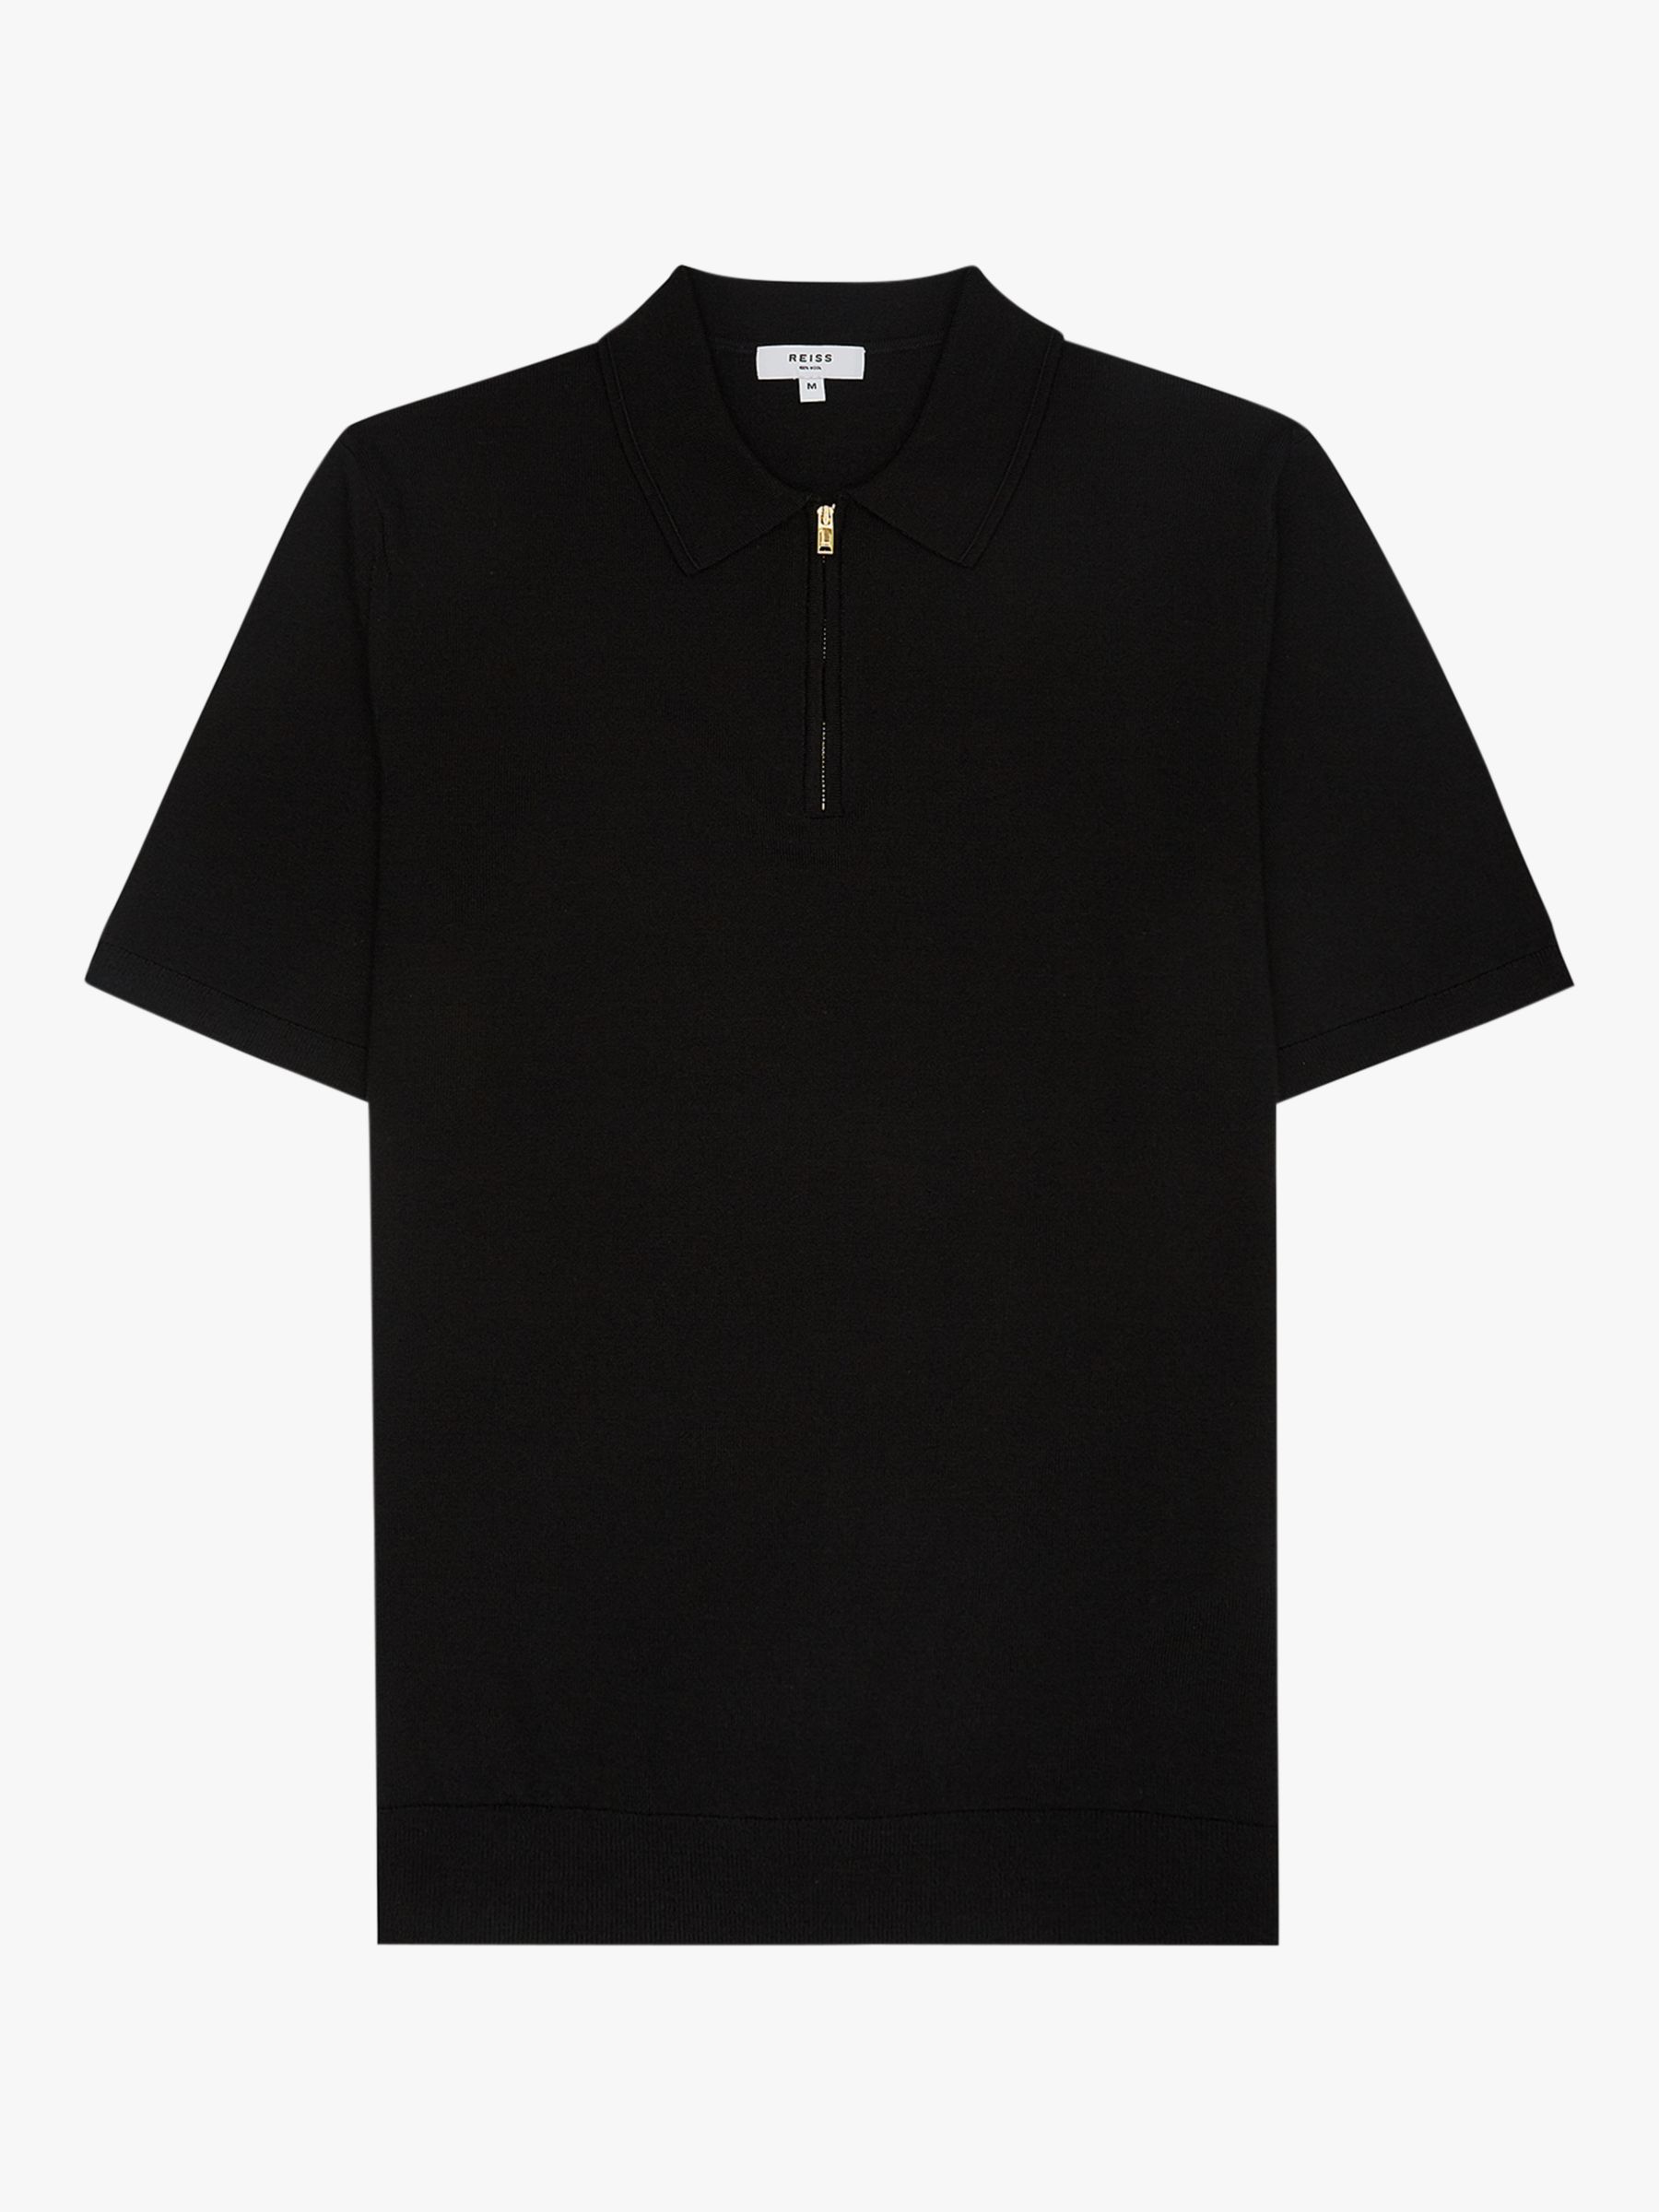 Reiss Maxwell Merino Zip Neck Polo Shirt, Black at John Lewis & Partners